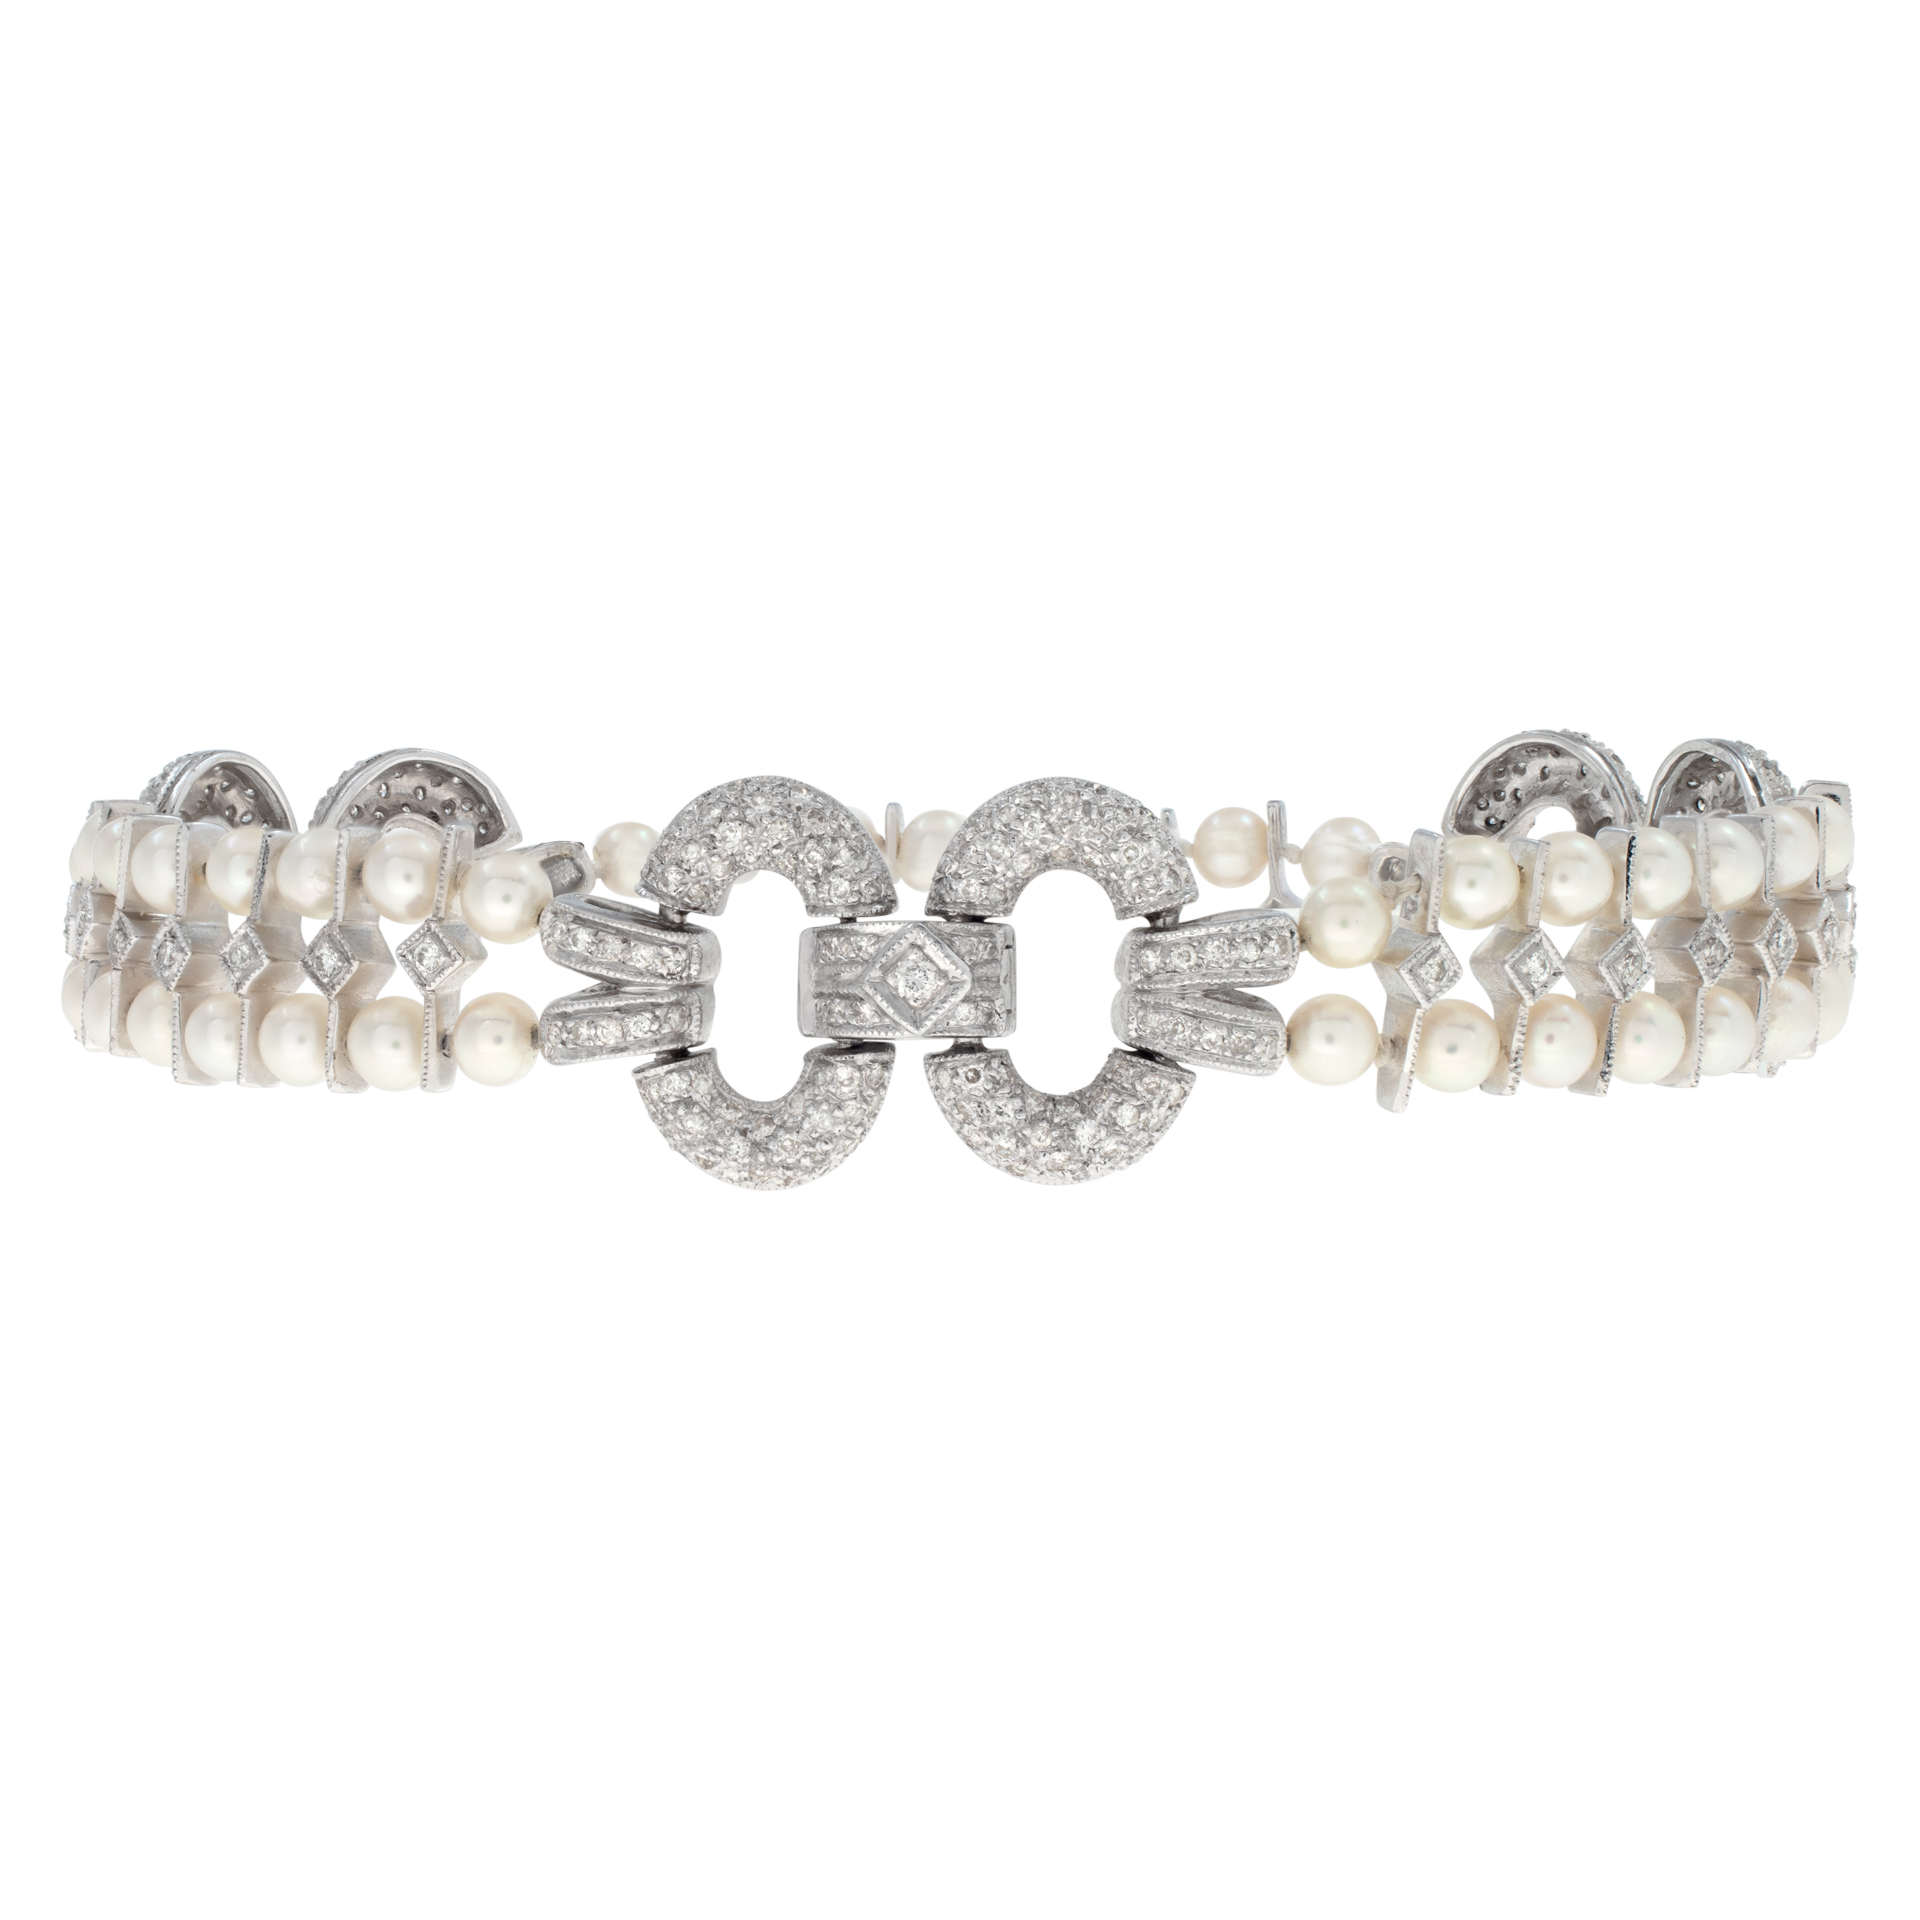 18k white gold diamond and pearls bracelet